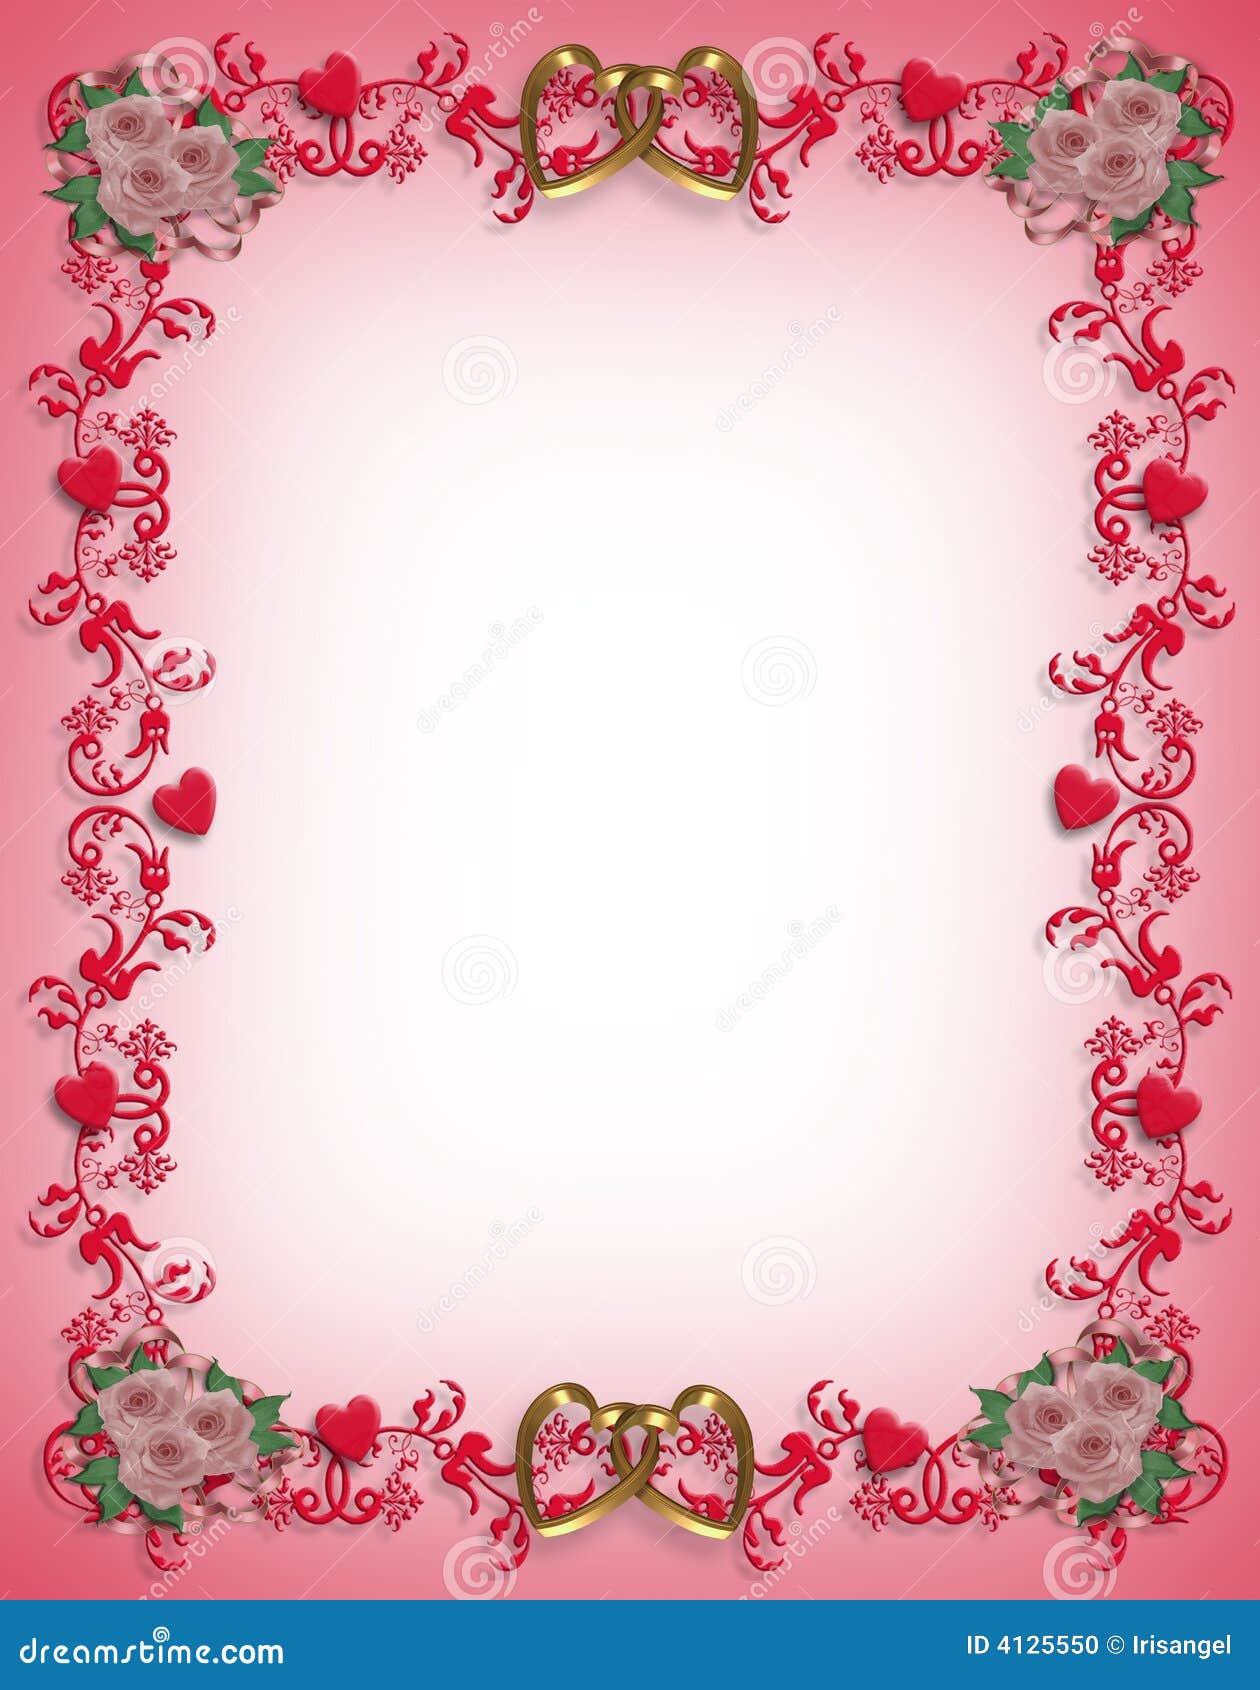 Valentines Day Hearts Border Design Stock Illustration ...